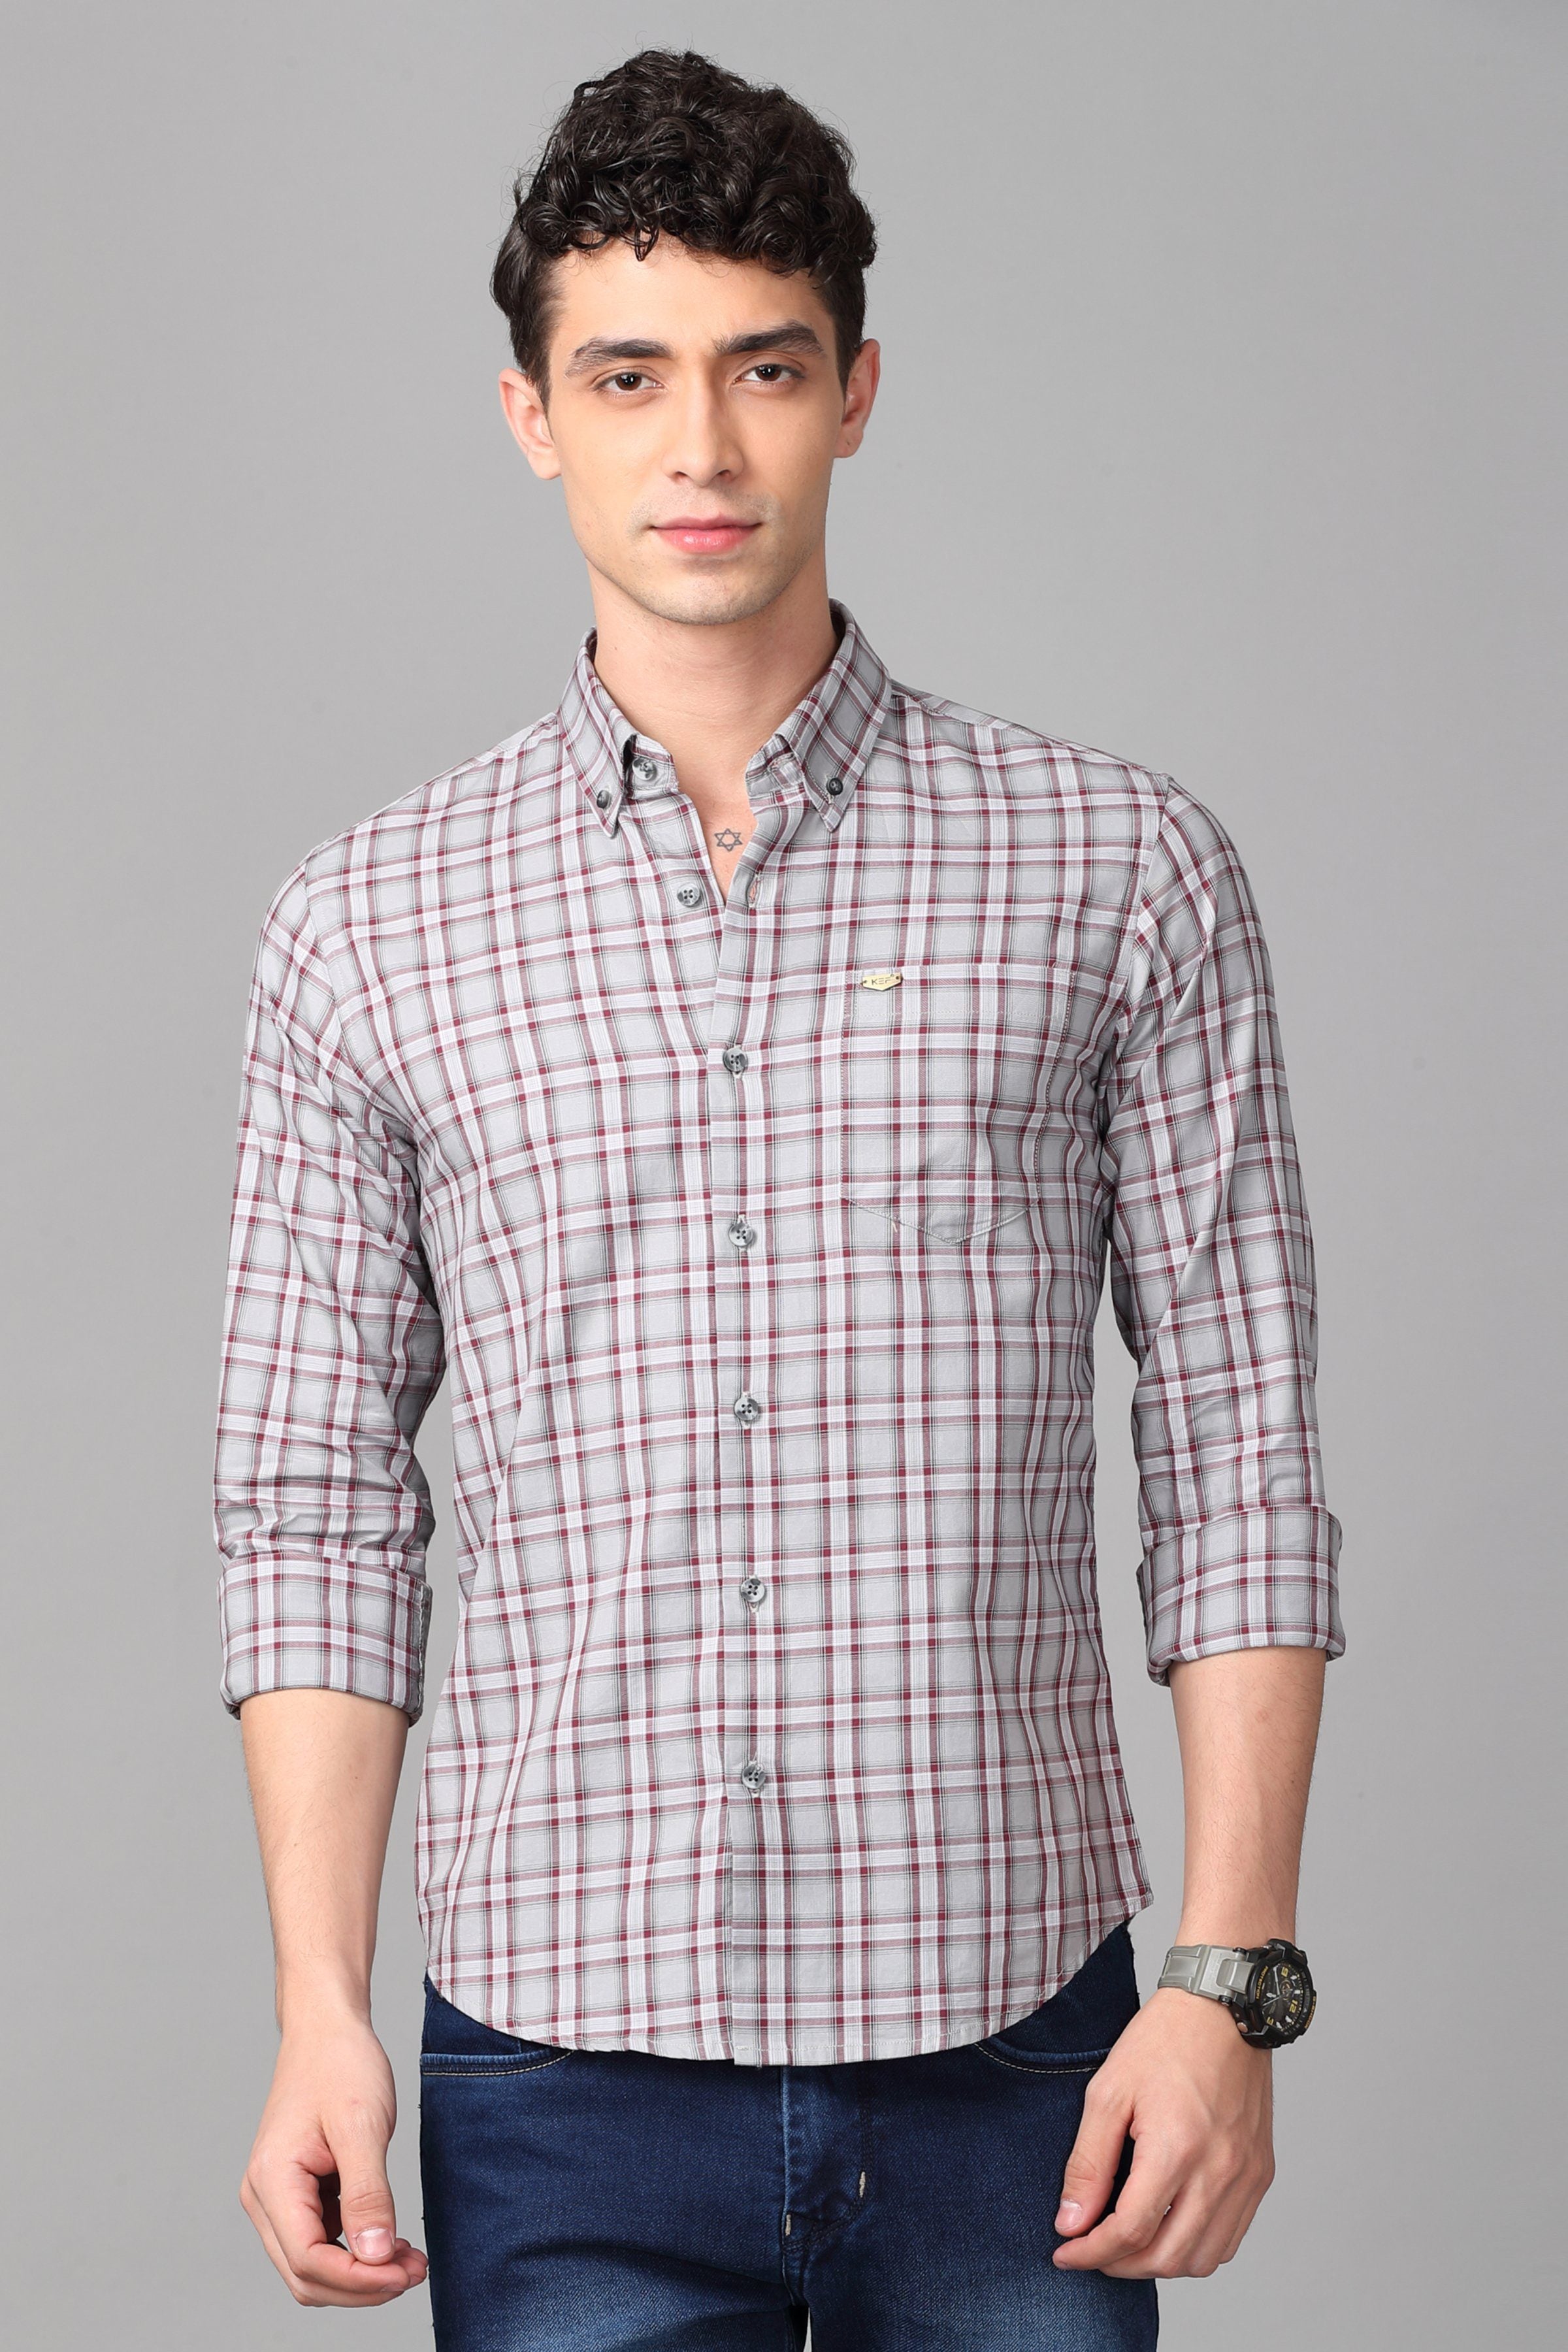 Grey with Red Checks Shirt Shirts KEF 